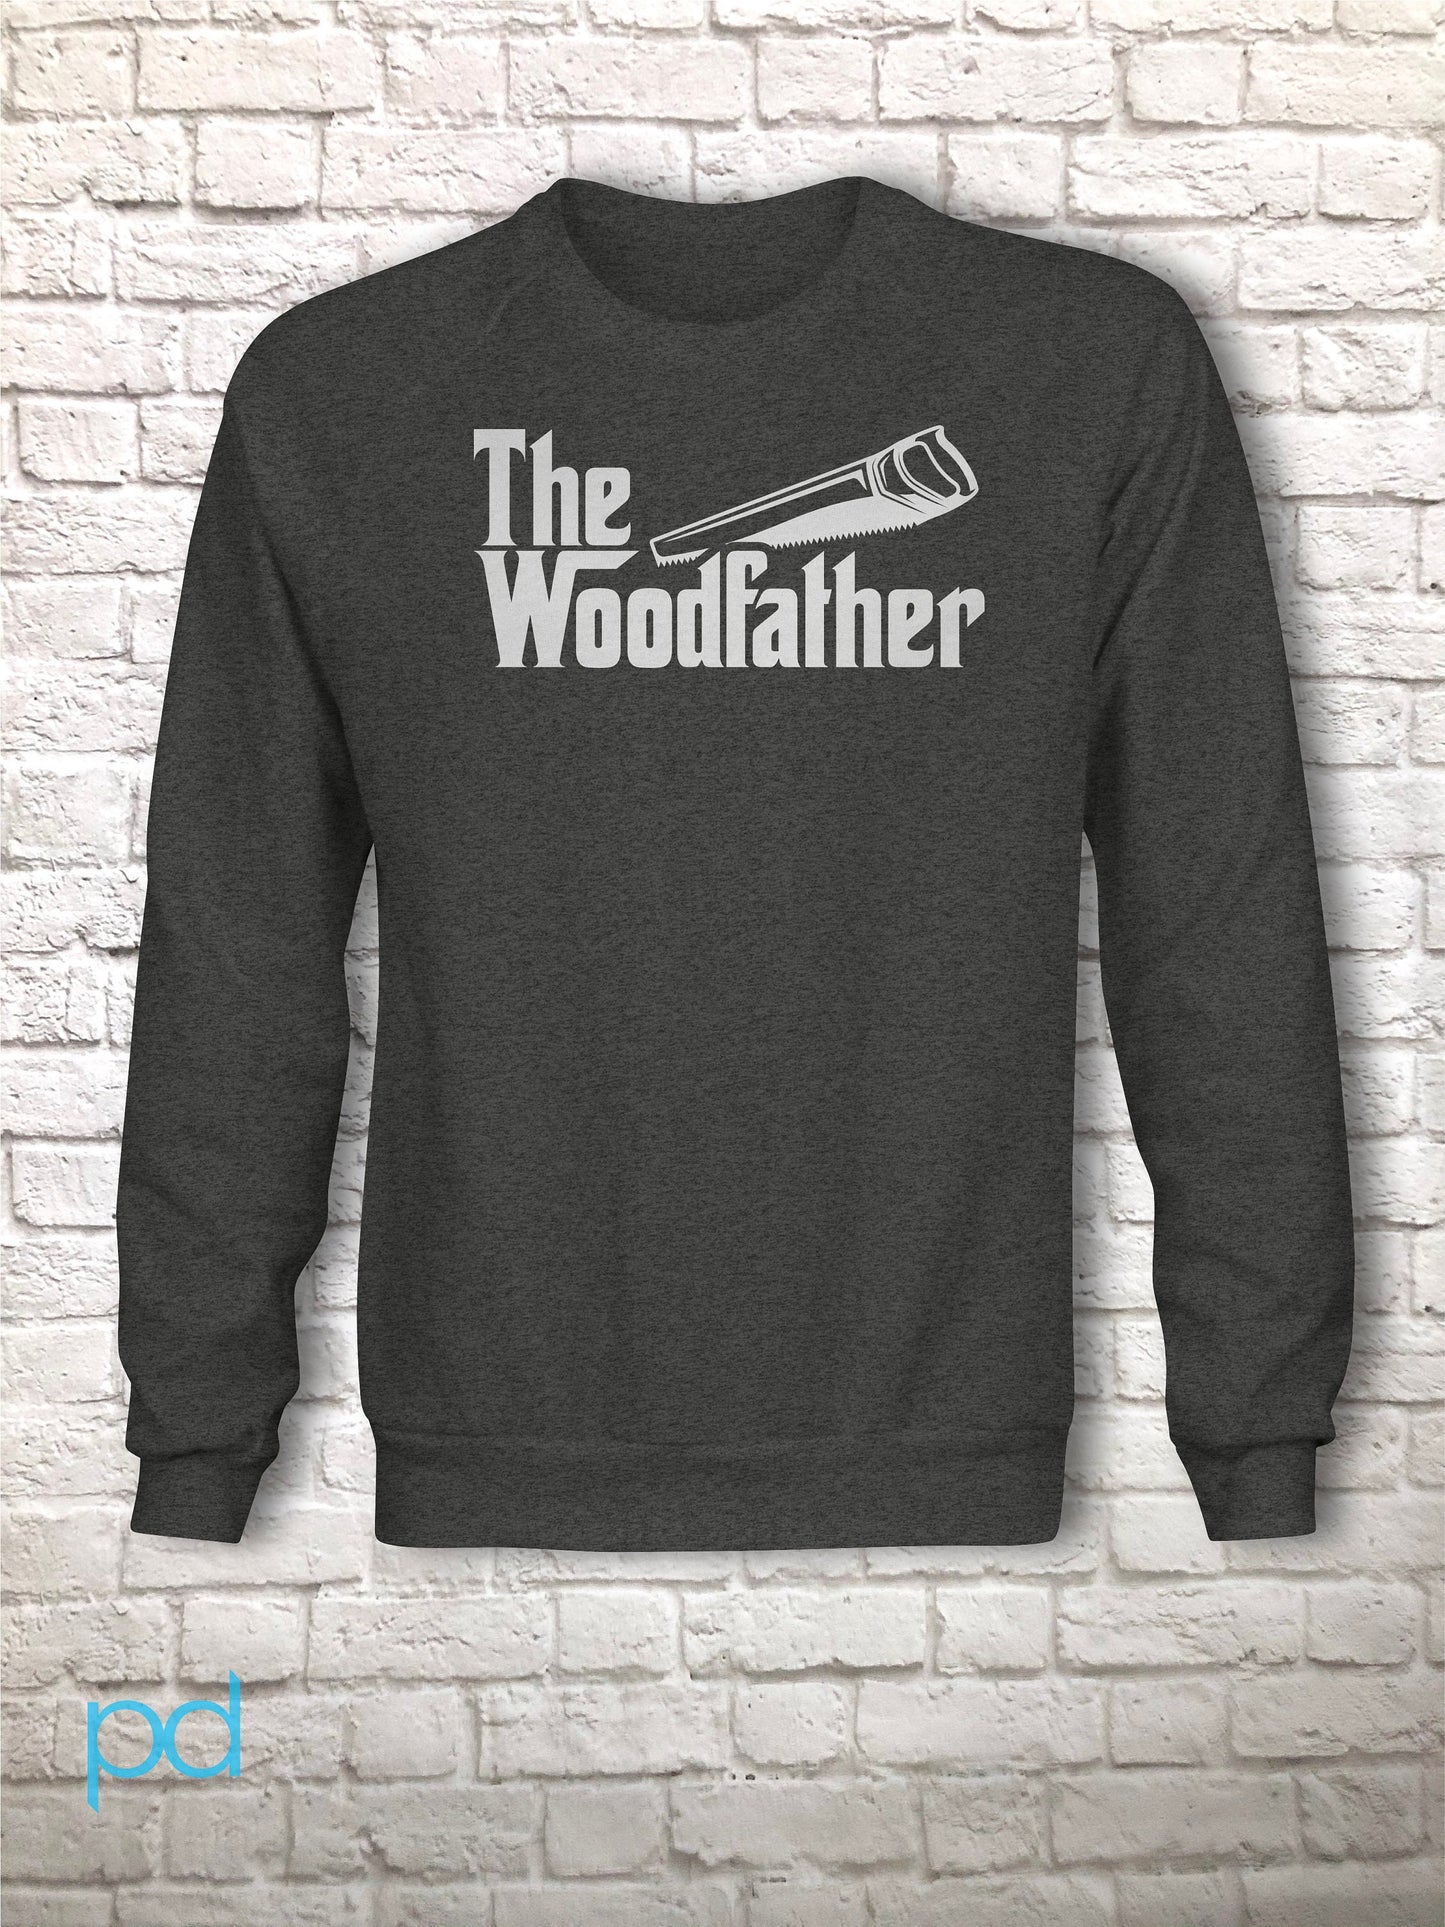 Funny Carpenter Sweatshirt, Woodfather Parody Gift Idea, Humorous Woodworking Joiner Sweater Jumper, Handsaw Clean